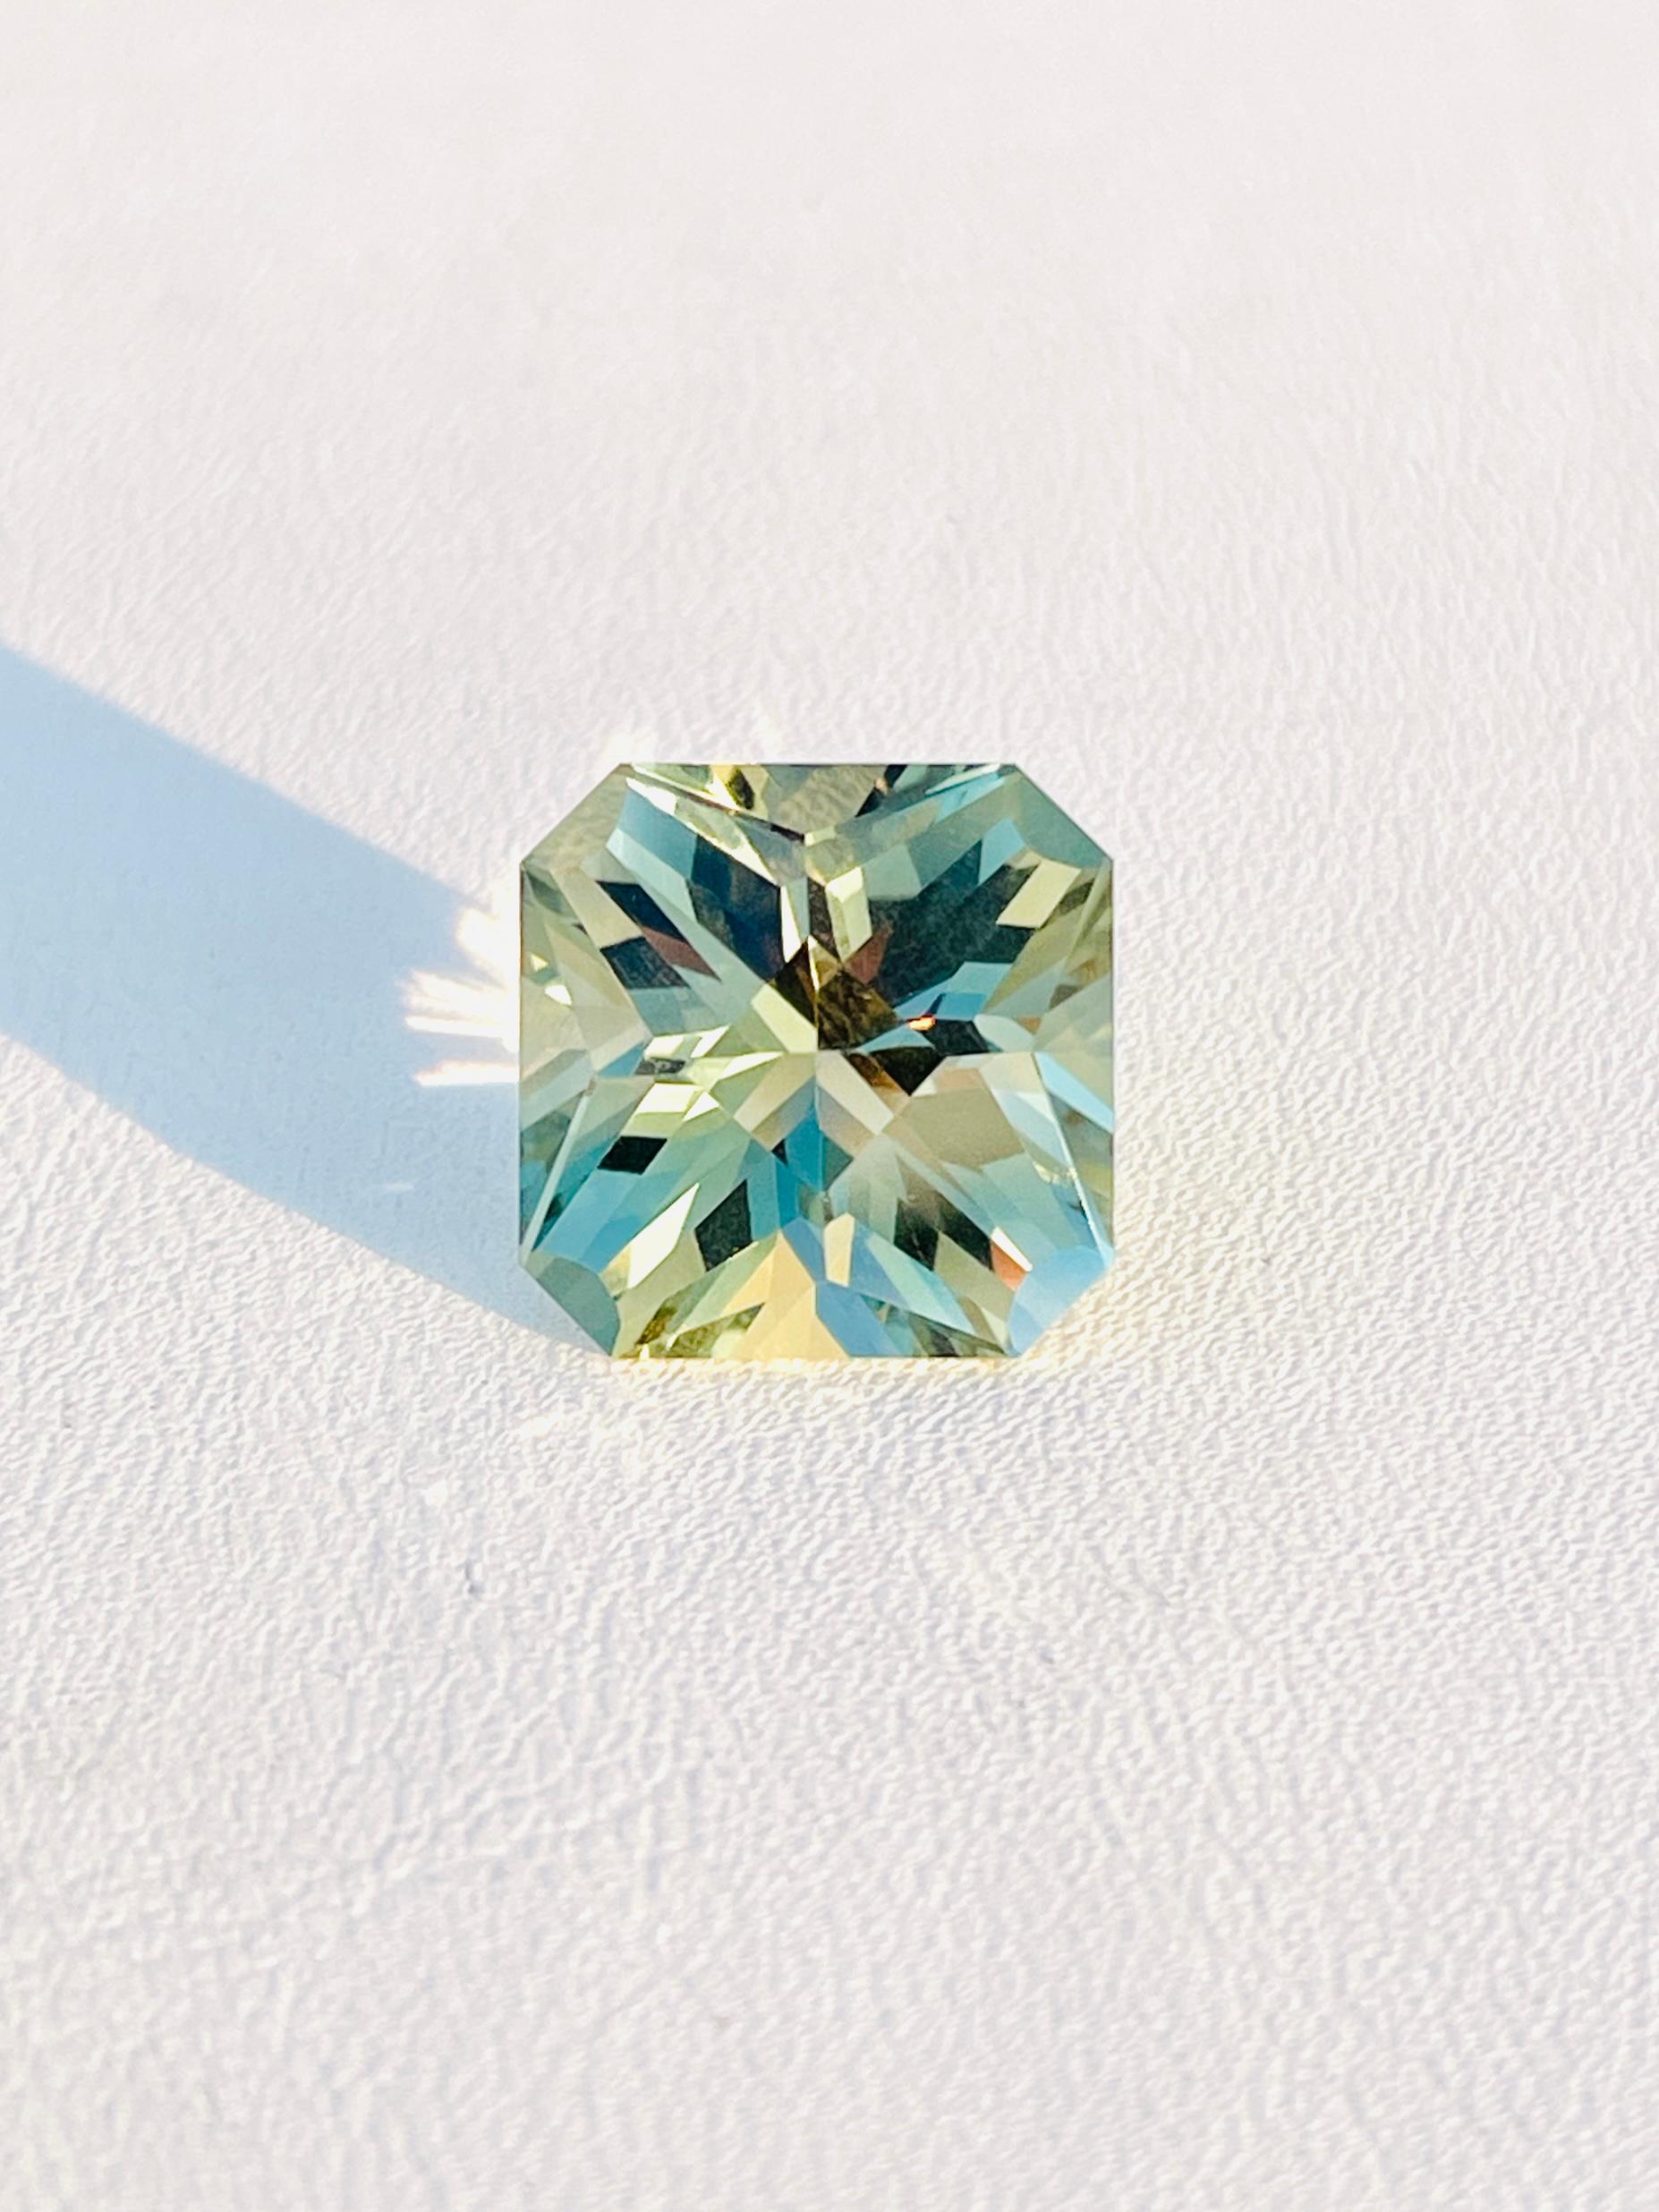 Octagon Cut Master precision cutting gemstone Natural Green quartz 10.31ct unique piece  For Sale